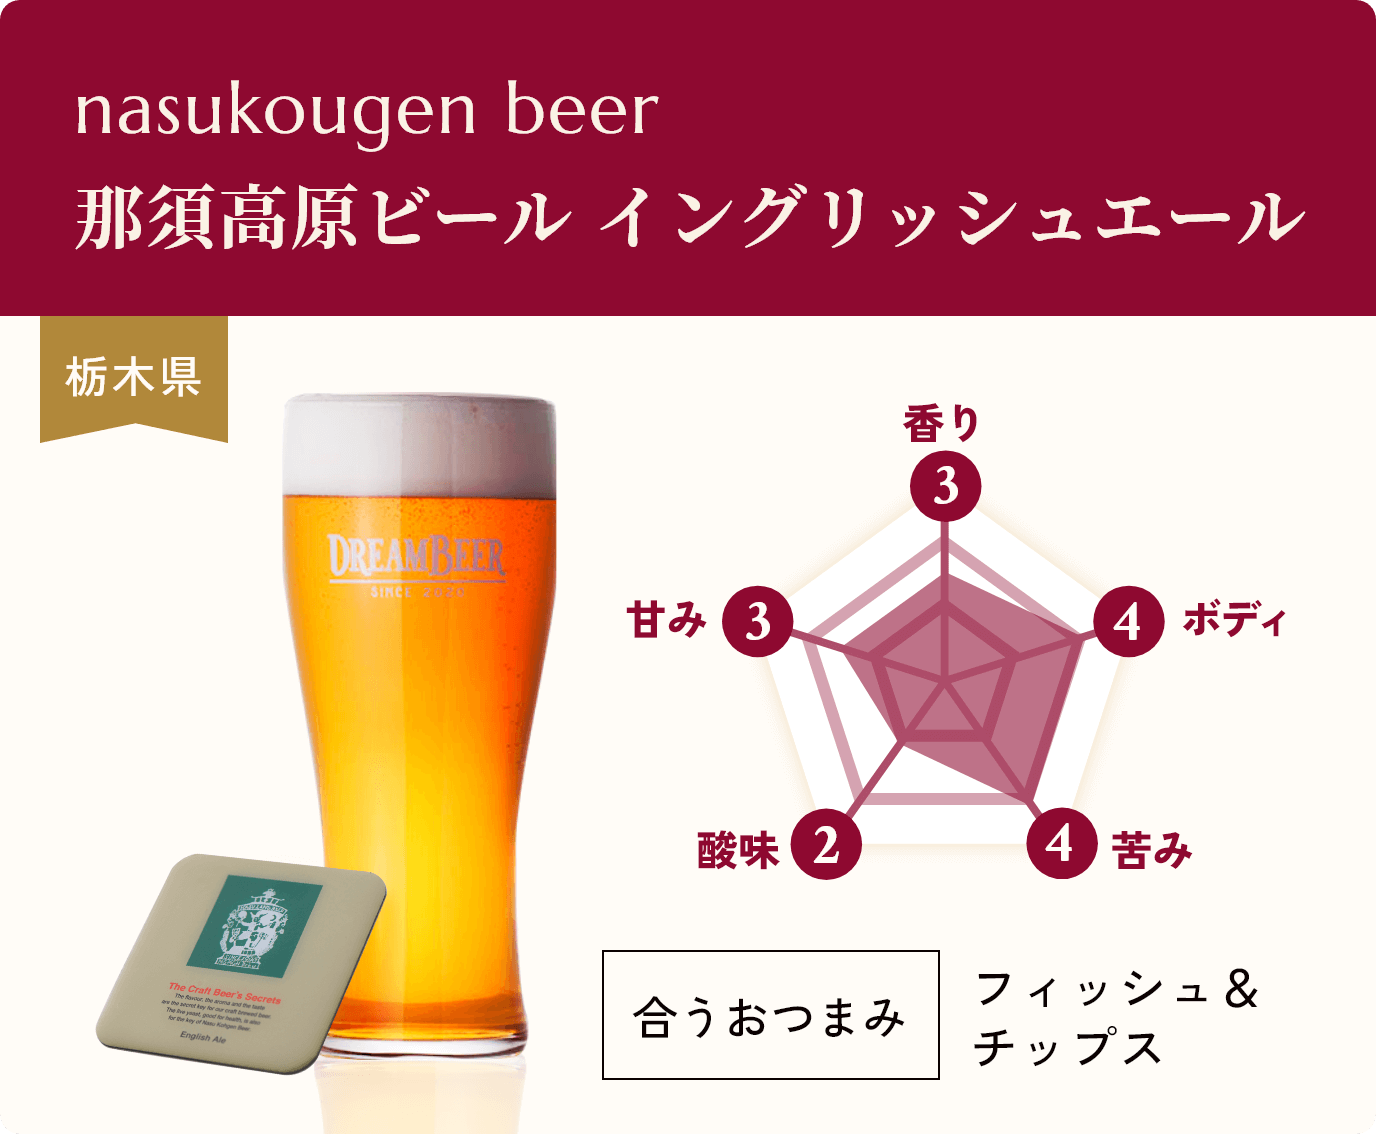 nasukougen beer,那須高原ビール イングリッシュエール